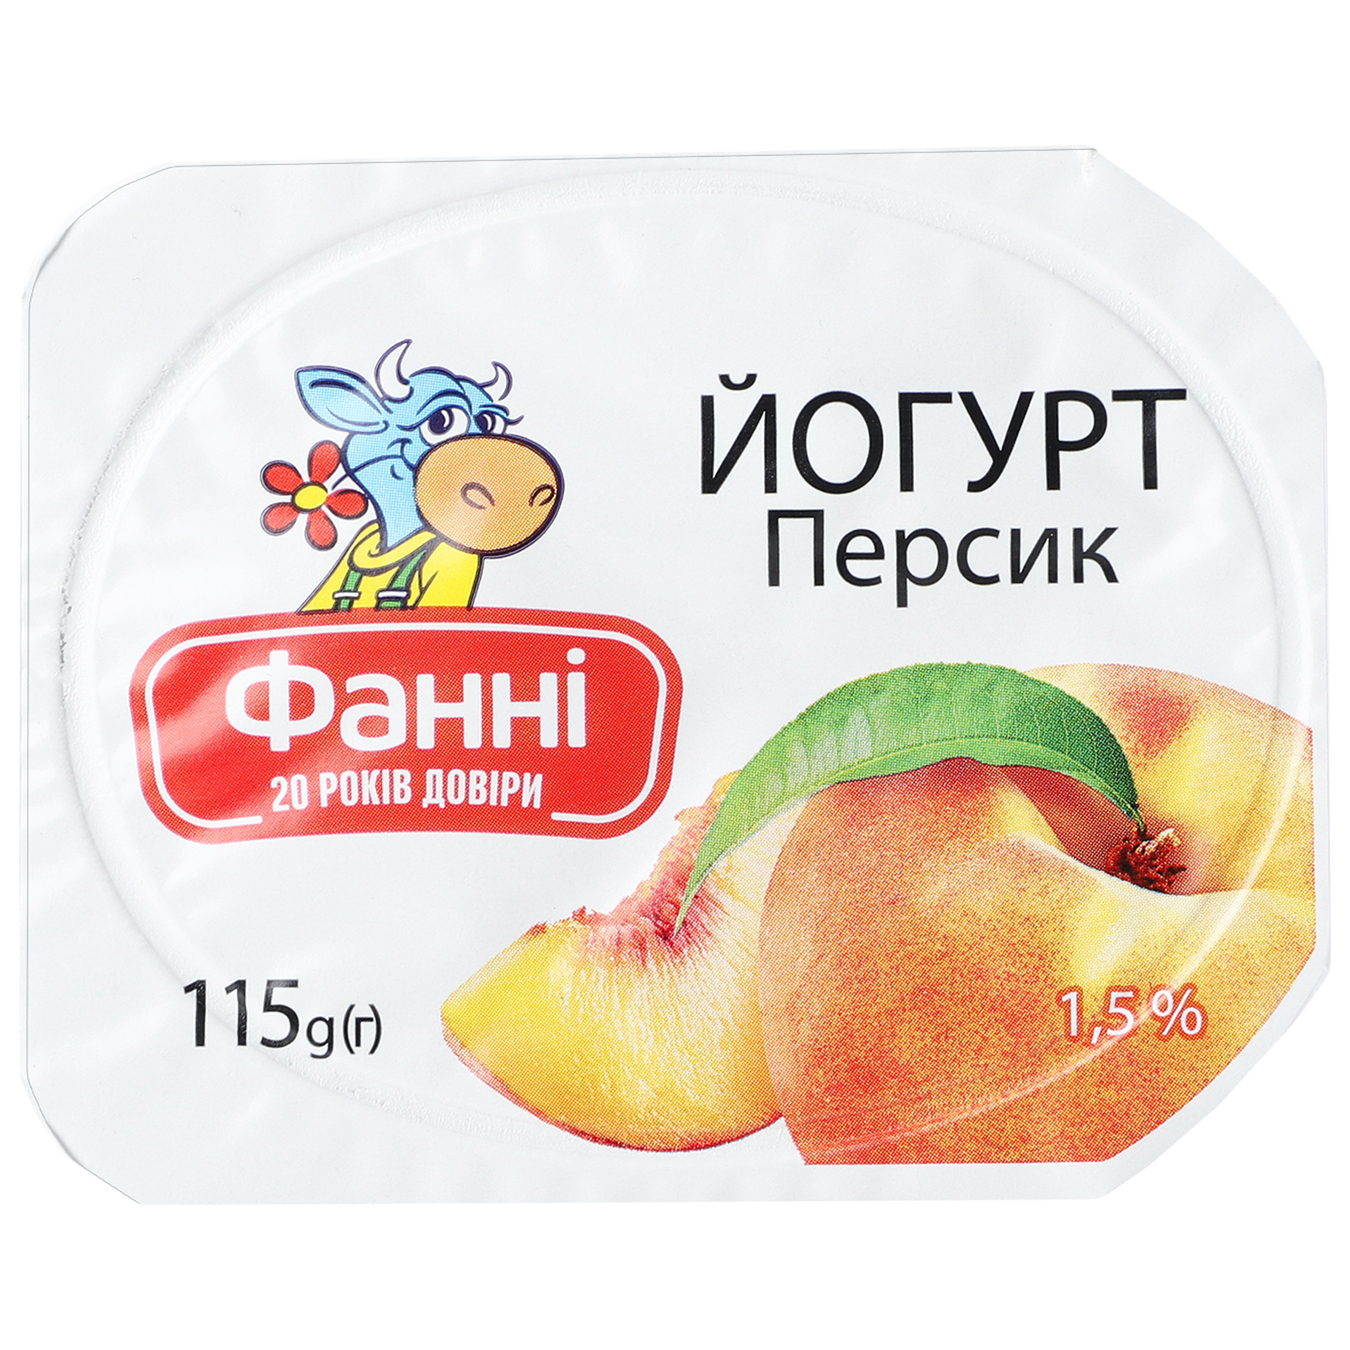 Fanny yogurt with peach filling cup 1.5% 115g 2